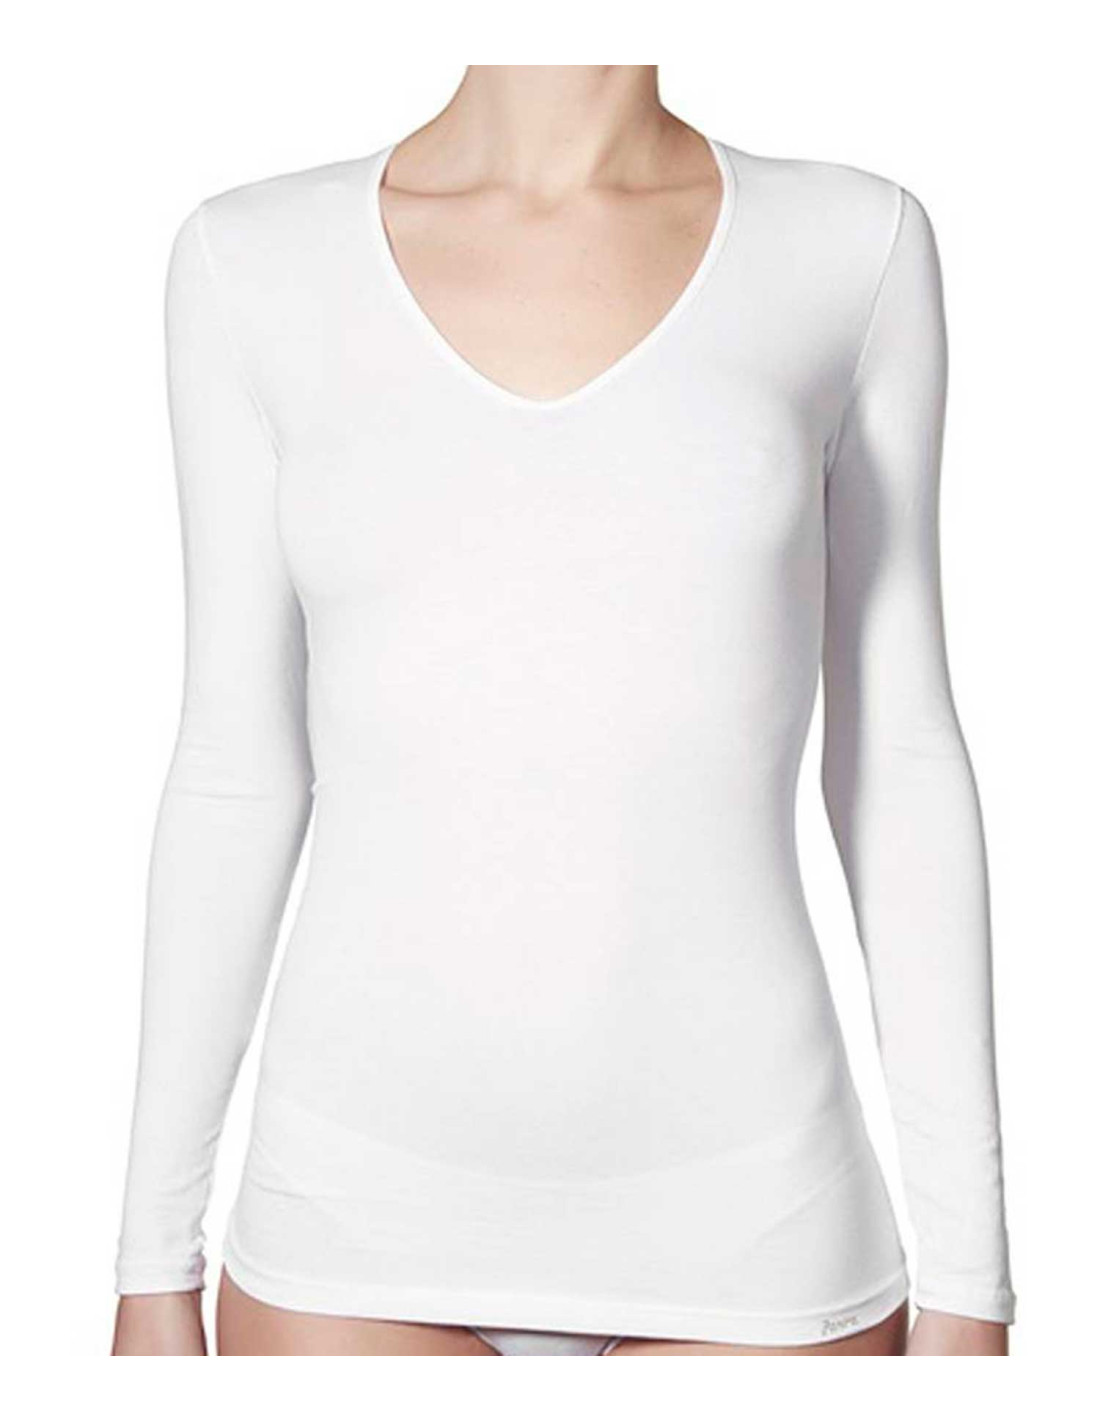 camiseta manga-larga algodon puntilla. Muy suave y elastica